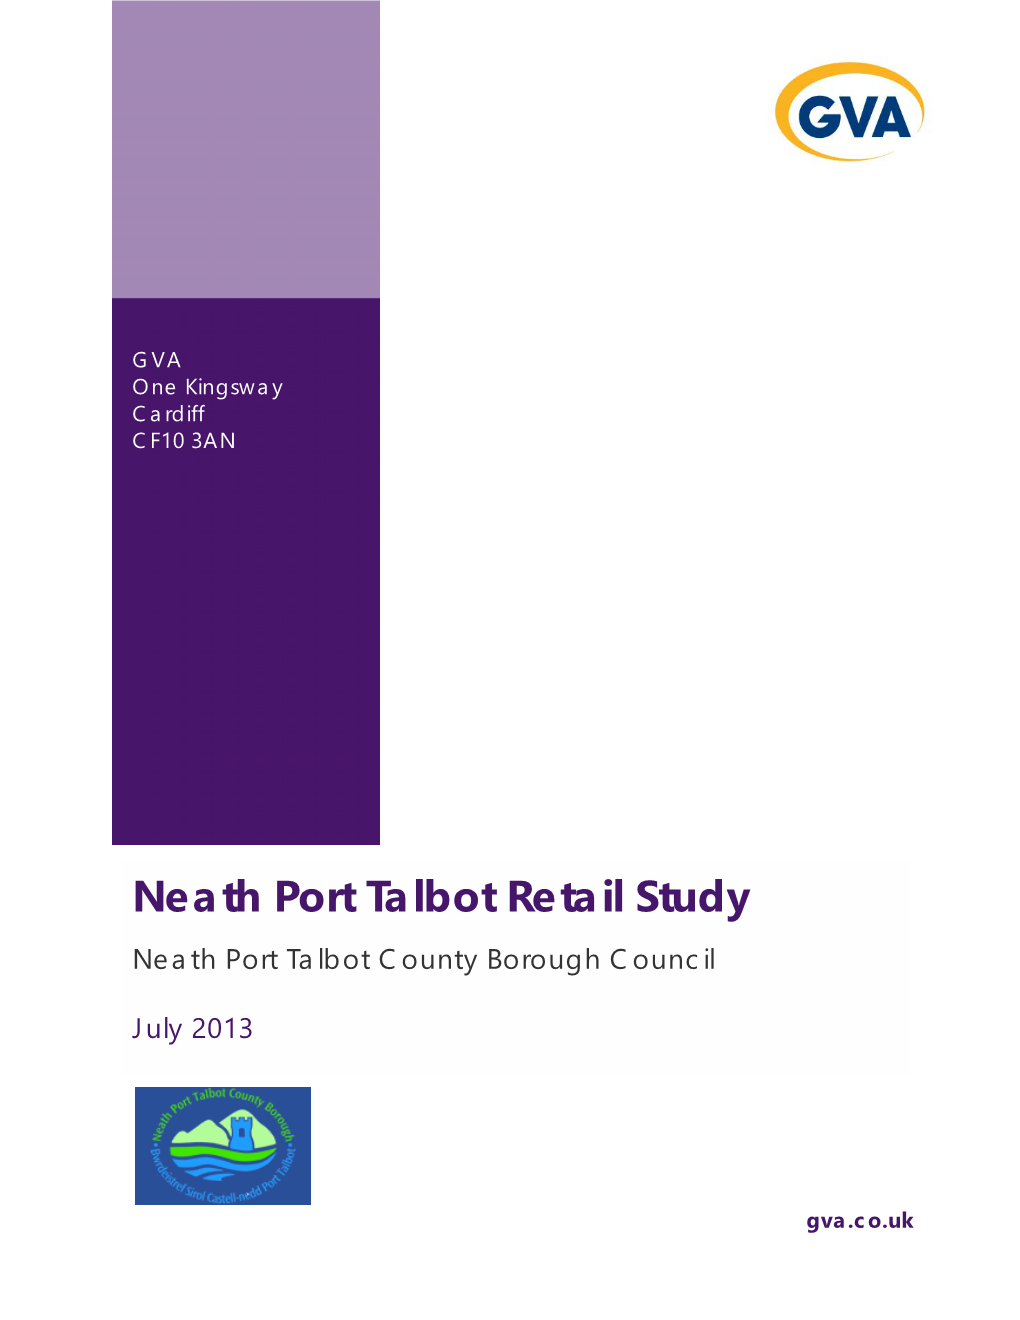 Neath Port Talbot Retail Study